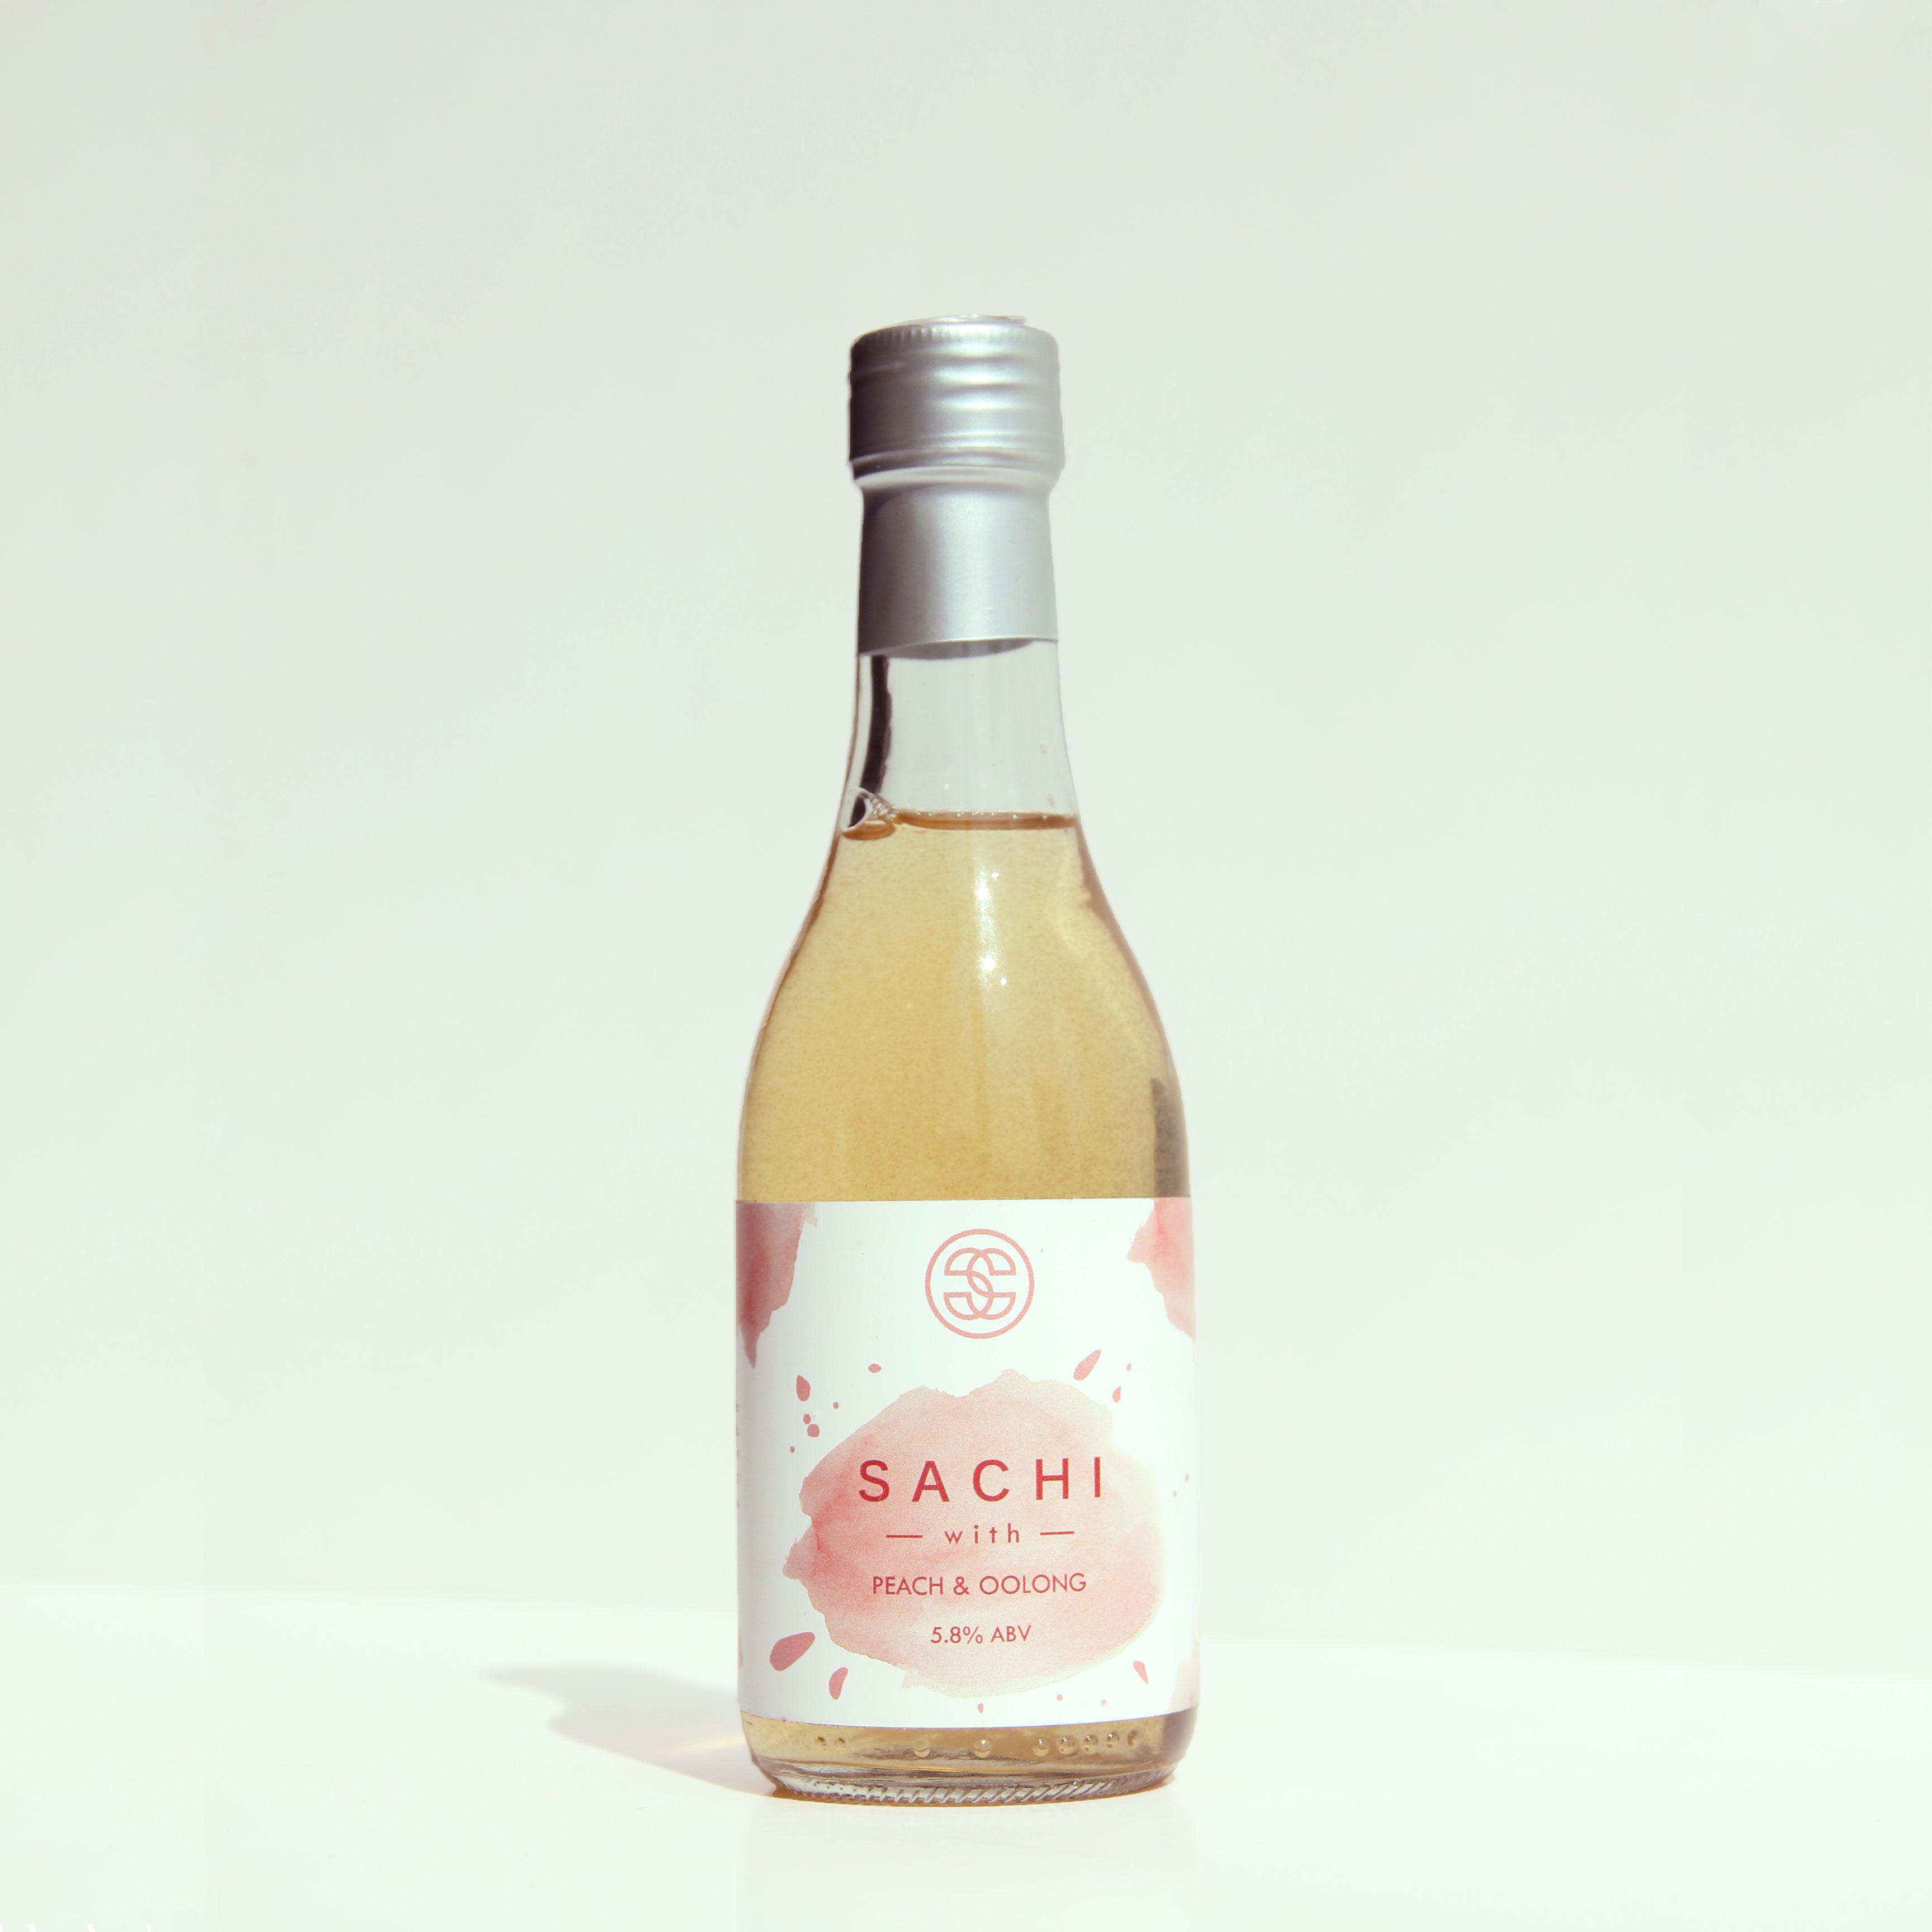 Sachi Soy Wine Sampler Gift set of 4 wines